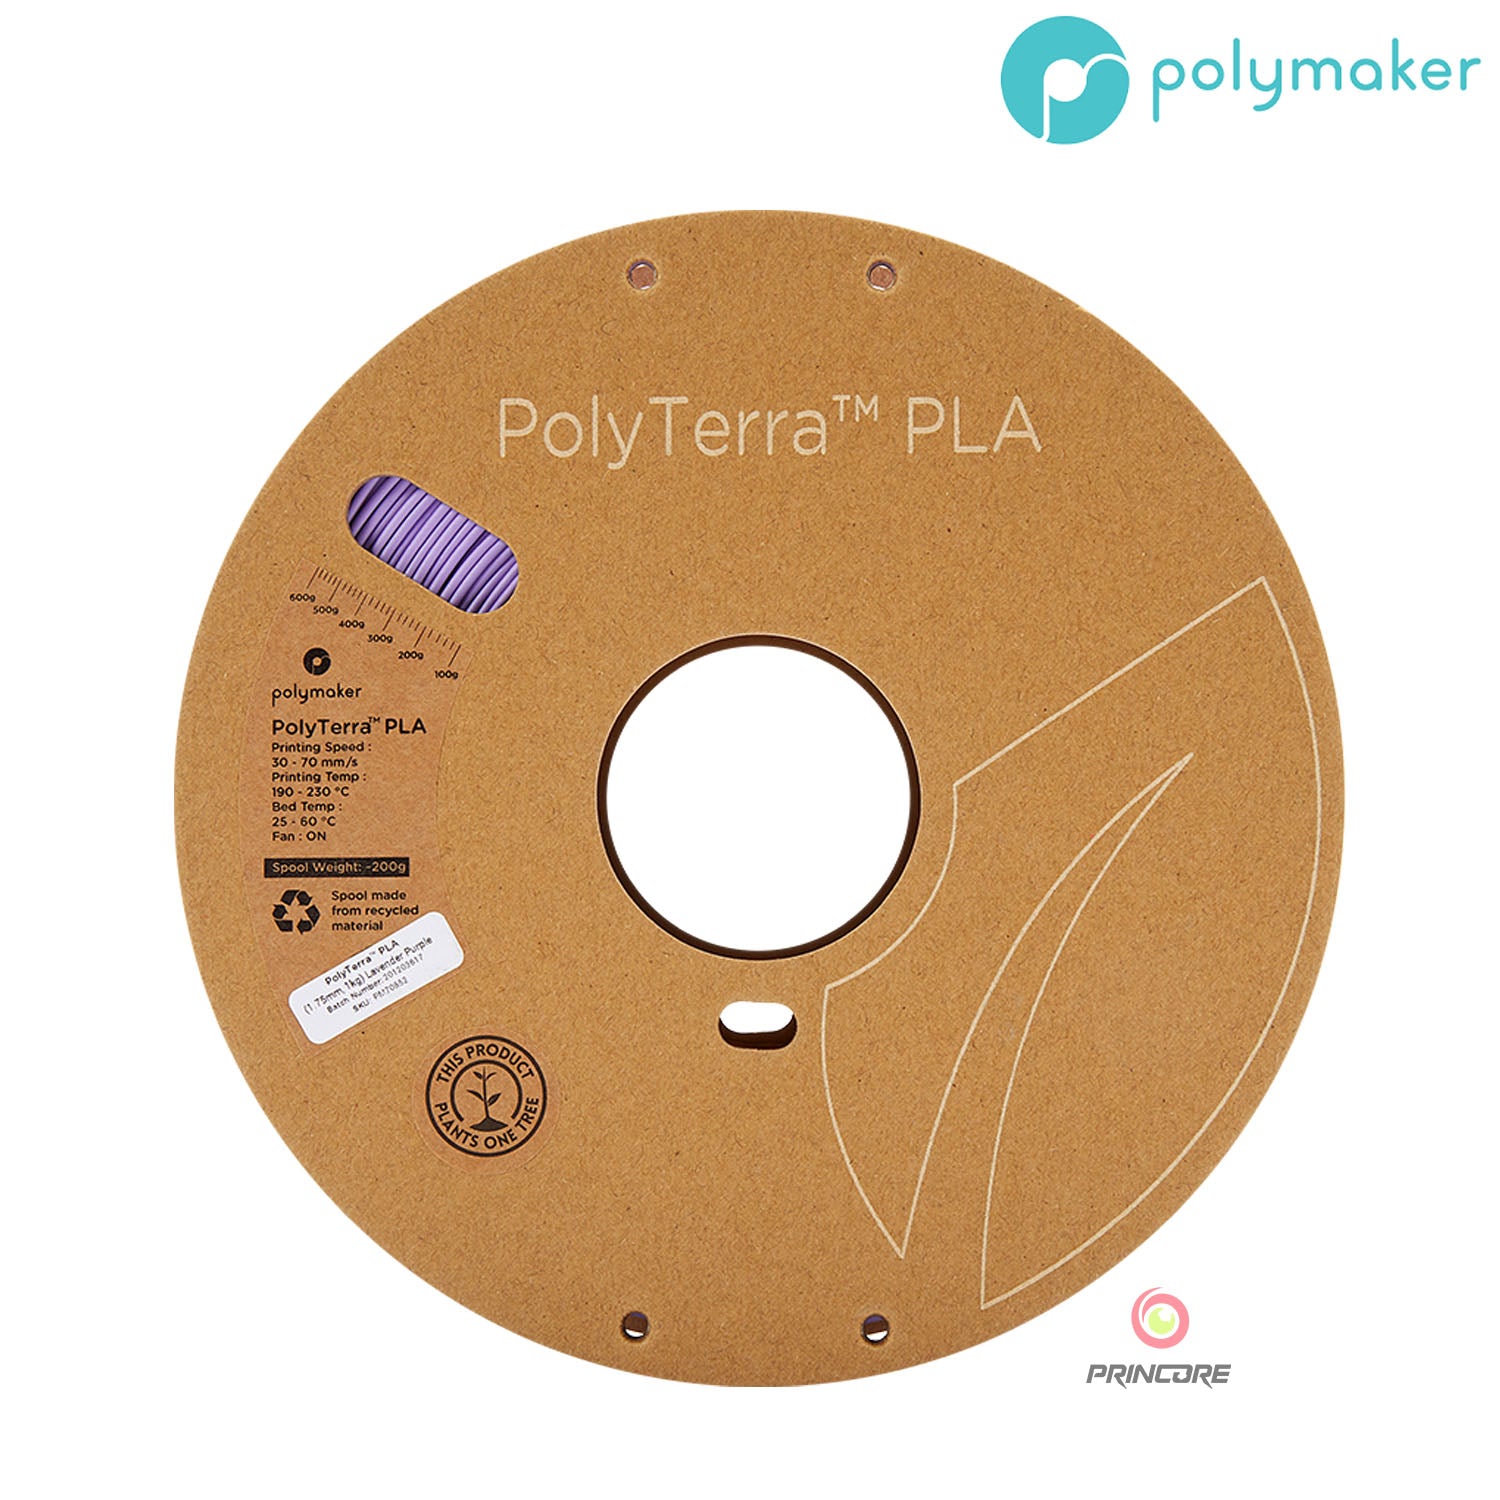 Polymaker PolyTerra™ PLA - Lavender Purple [1.75mm] (19,90€/Kg)